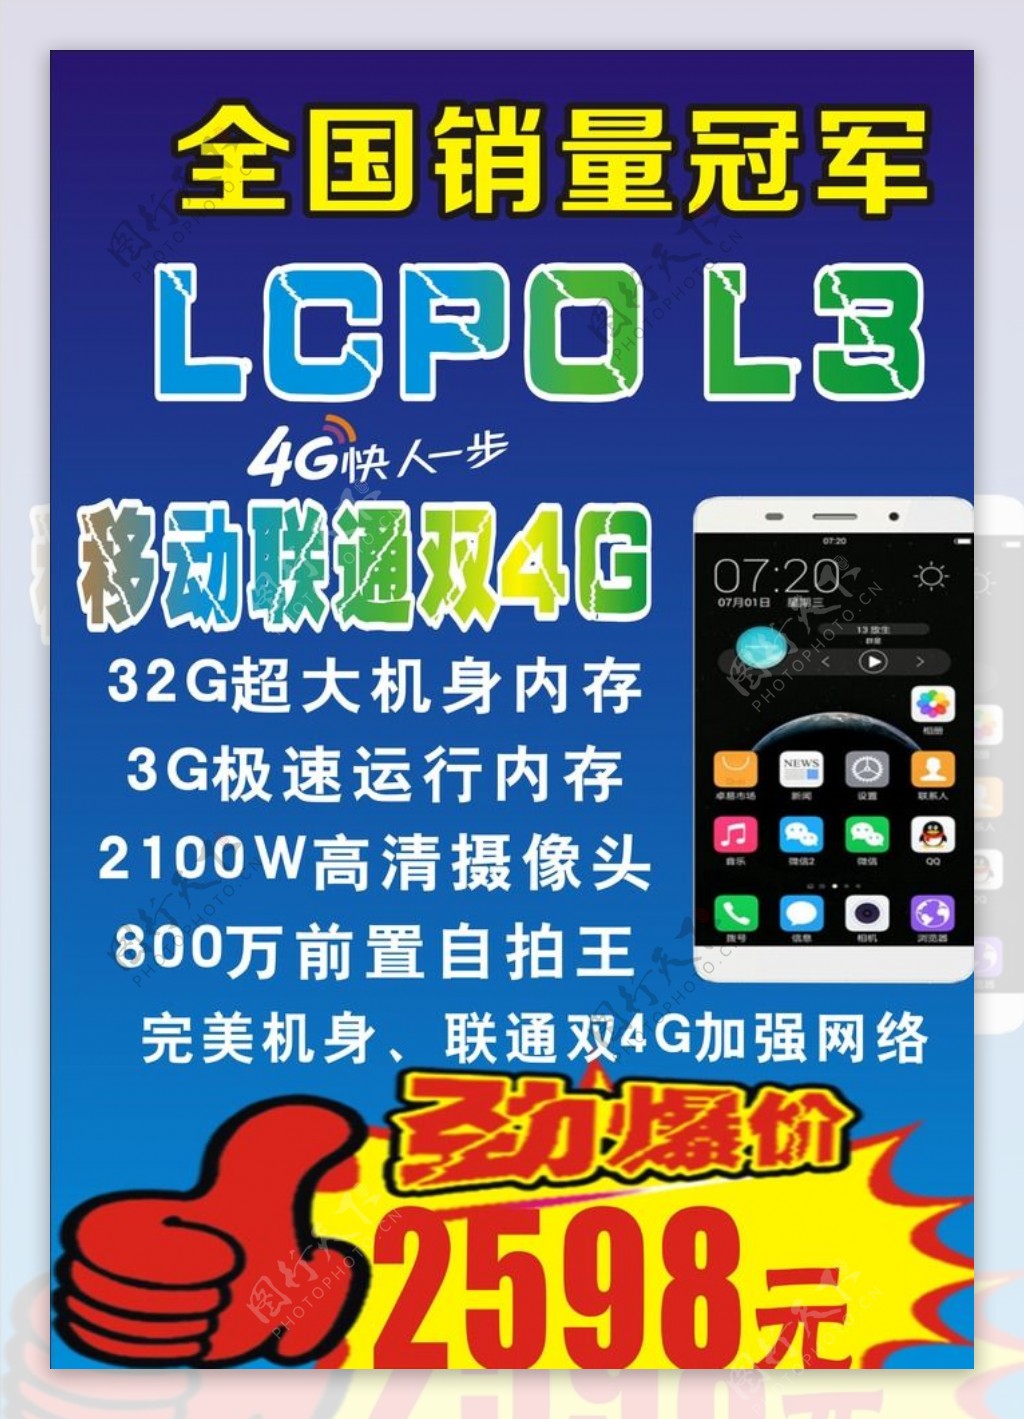 LOPOL3手机